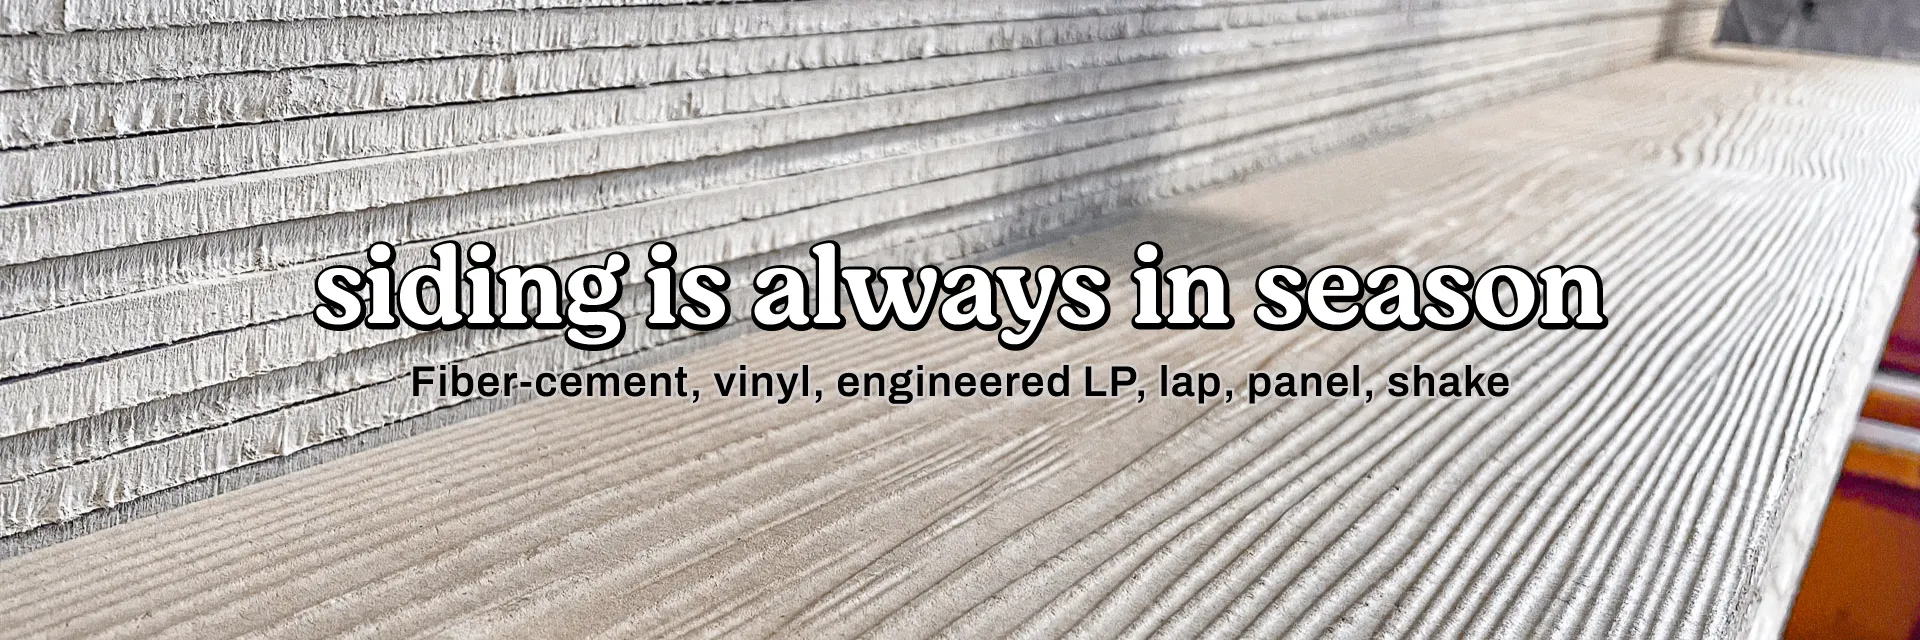 Siding is always in season! Fiber-cement, vinyl, LP, lap, panel, shake